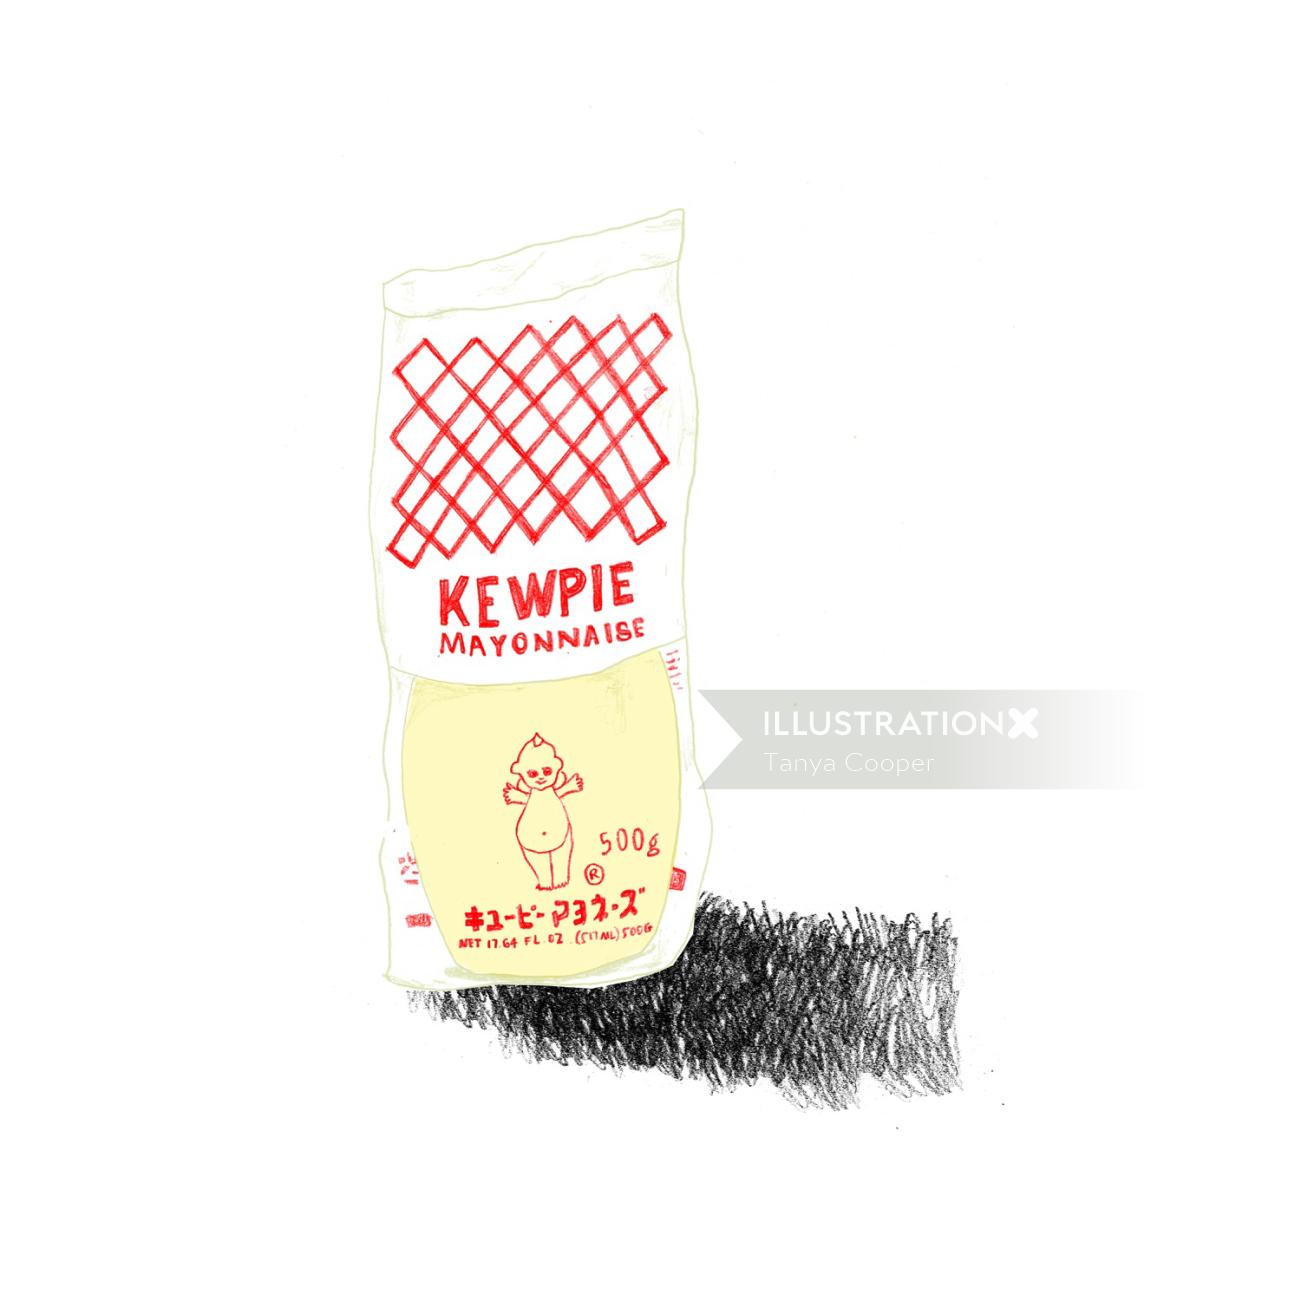 Drawing kewpie mayonnaise
